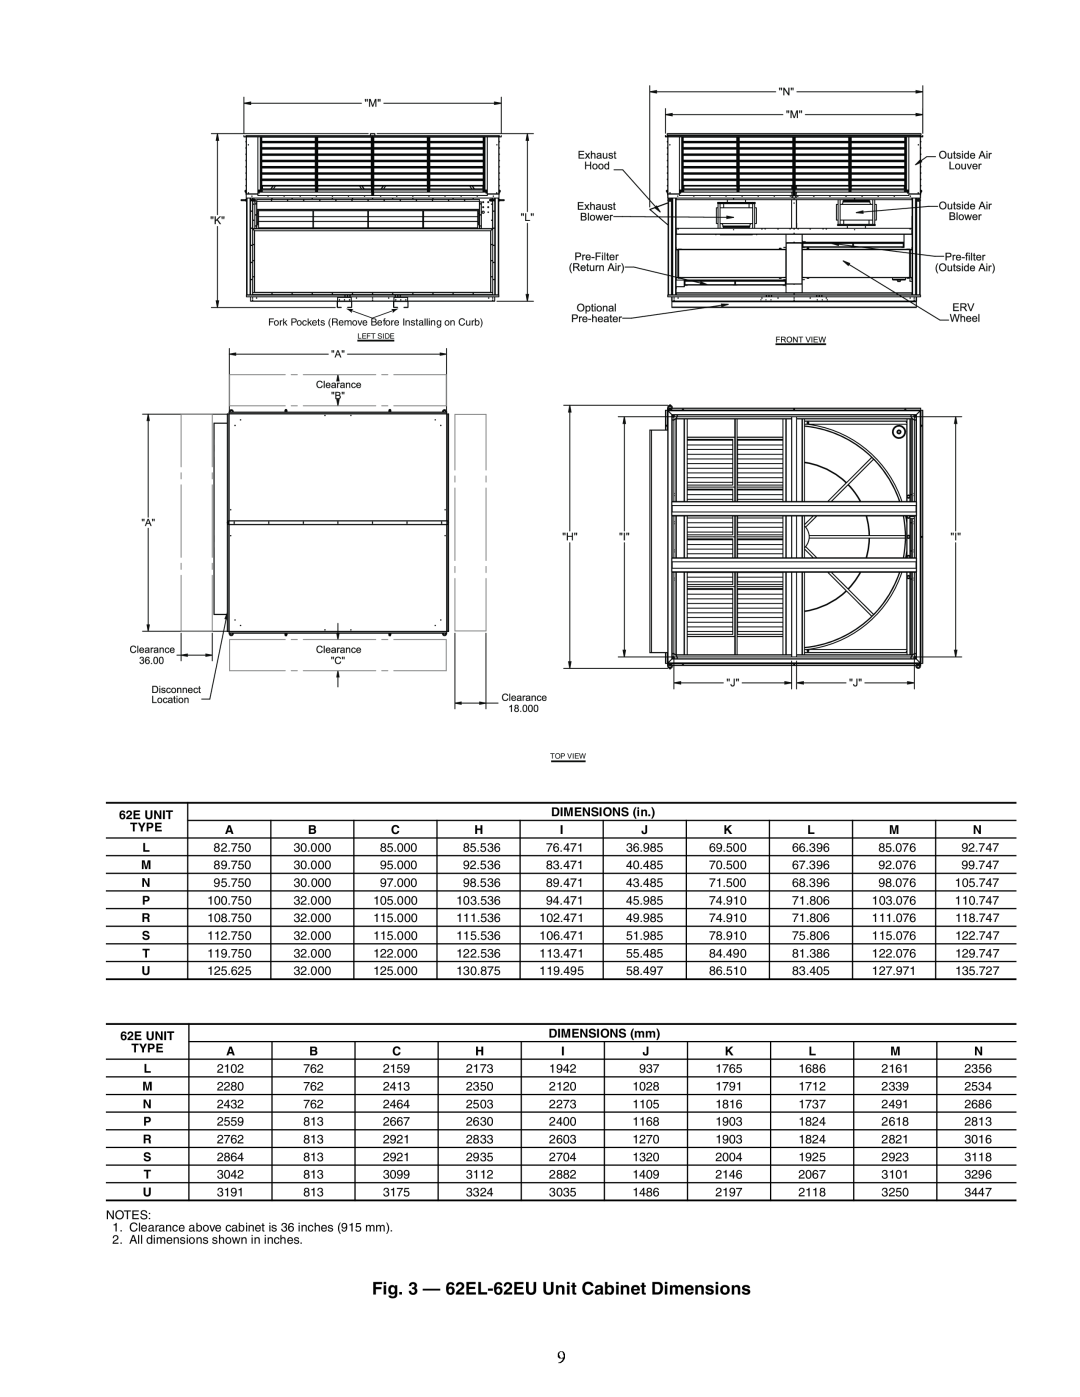 Carrier specifications a62-331, 62EL-62EUUnit Cabinet Dimensions, 62E UNIT, DIMENSIONS in, Type, DIMENSIONS mm 